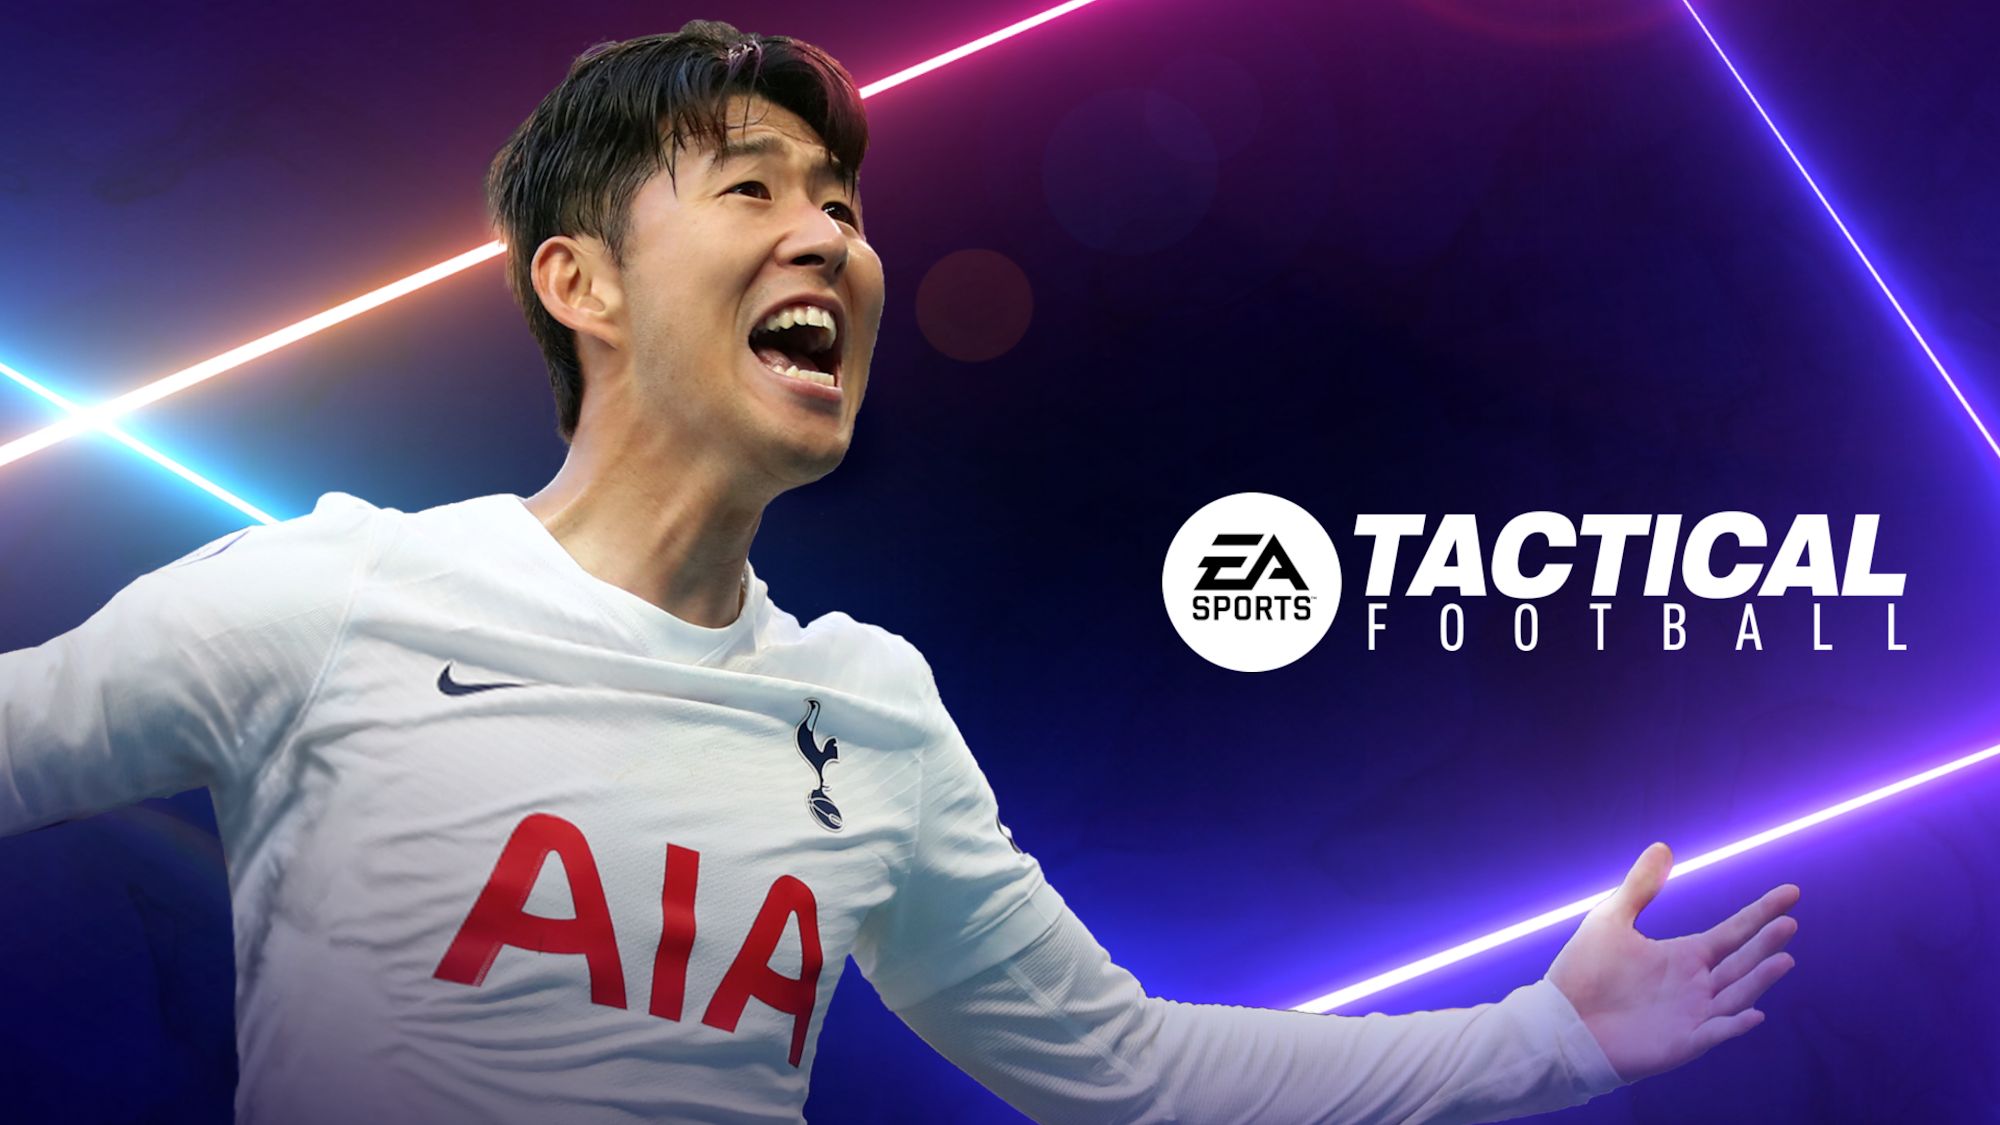 Download EA SPORTS Tactical Football für Android kostenlos.